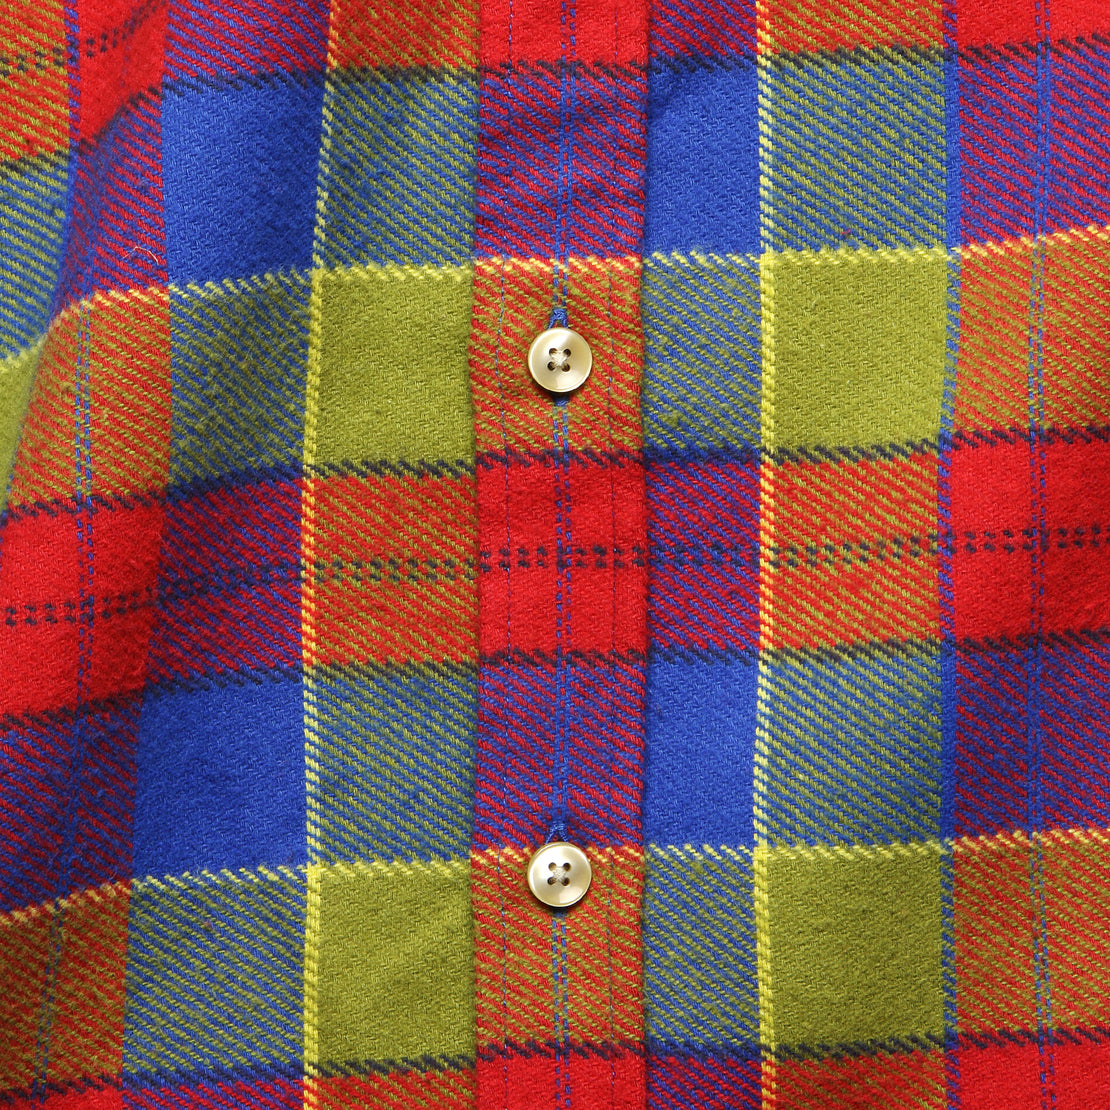 Nebraska Check Flannel - Red/Green/Blue - Portuguese Flannel - STAG Provisions - Tops - L/S Woven - Plaid